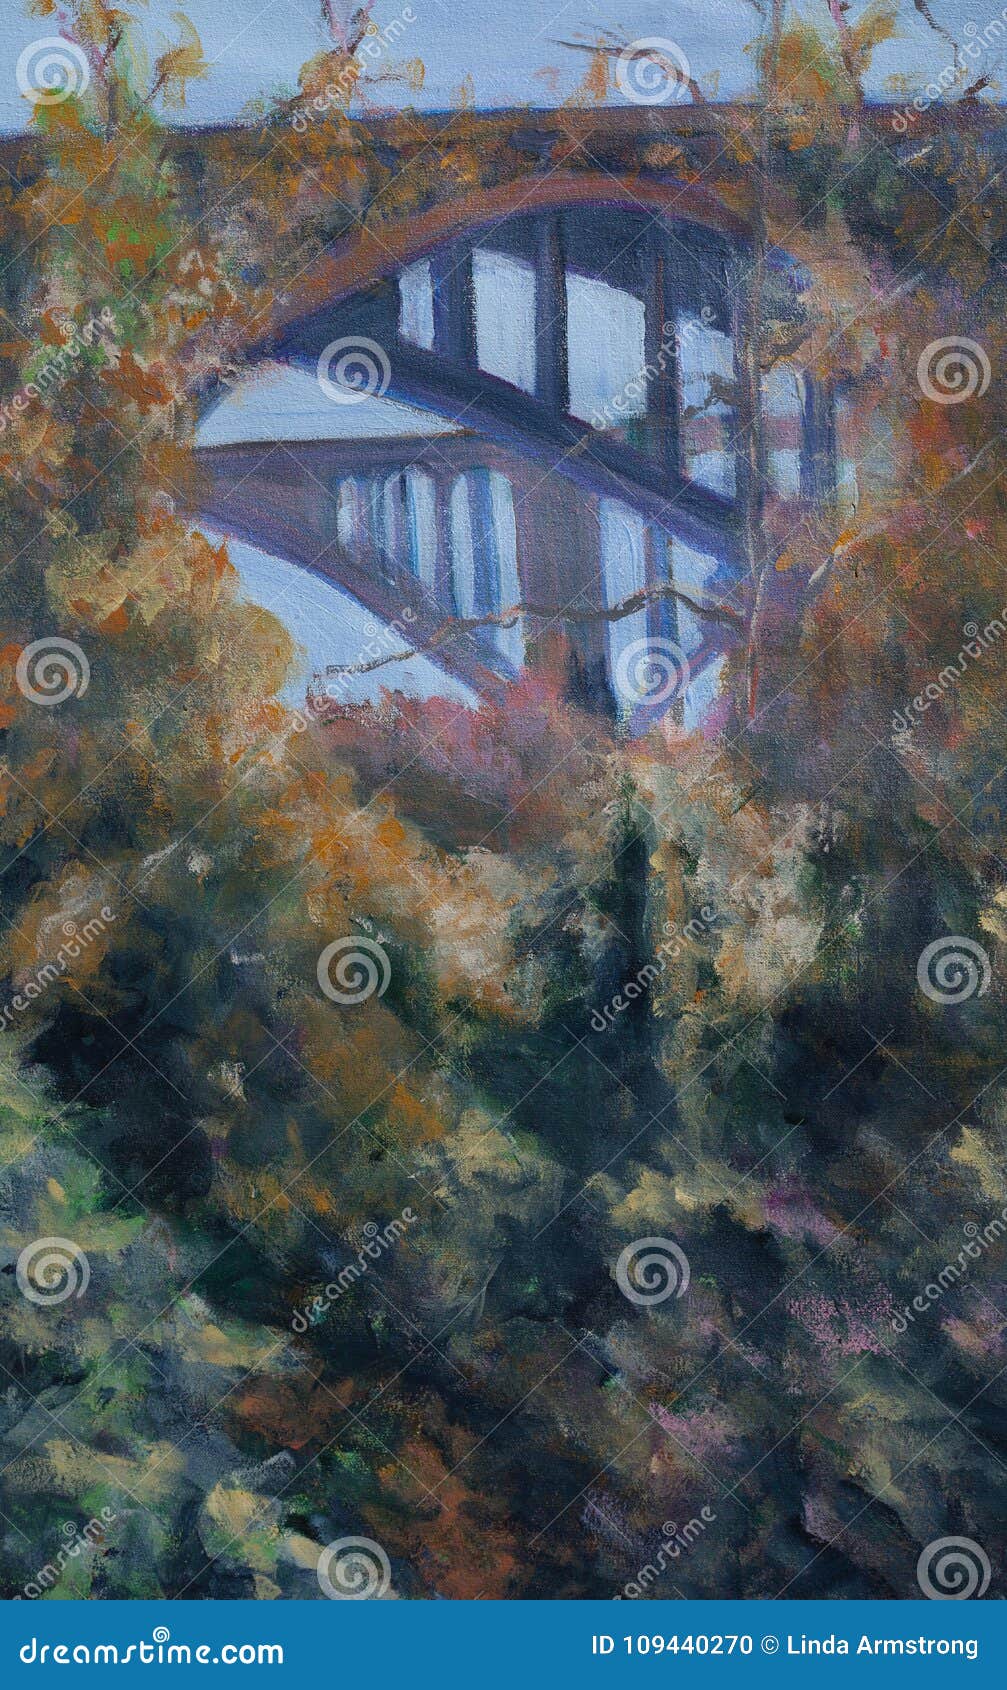 painting of bridges in pasadena`s arroyo seco